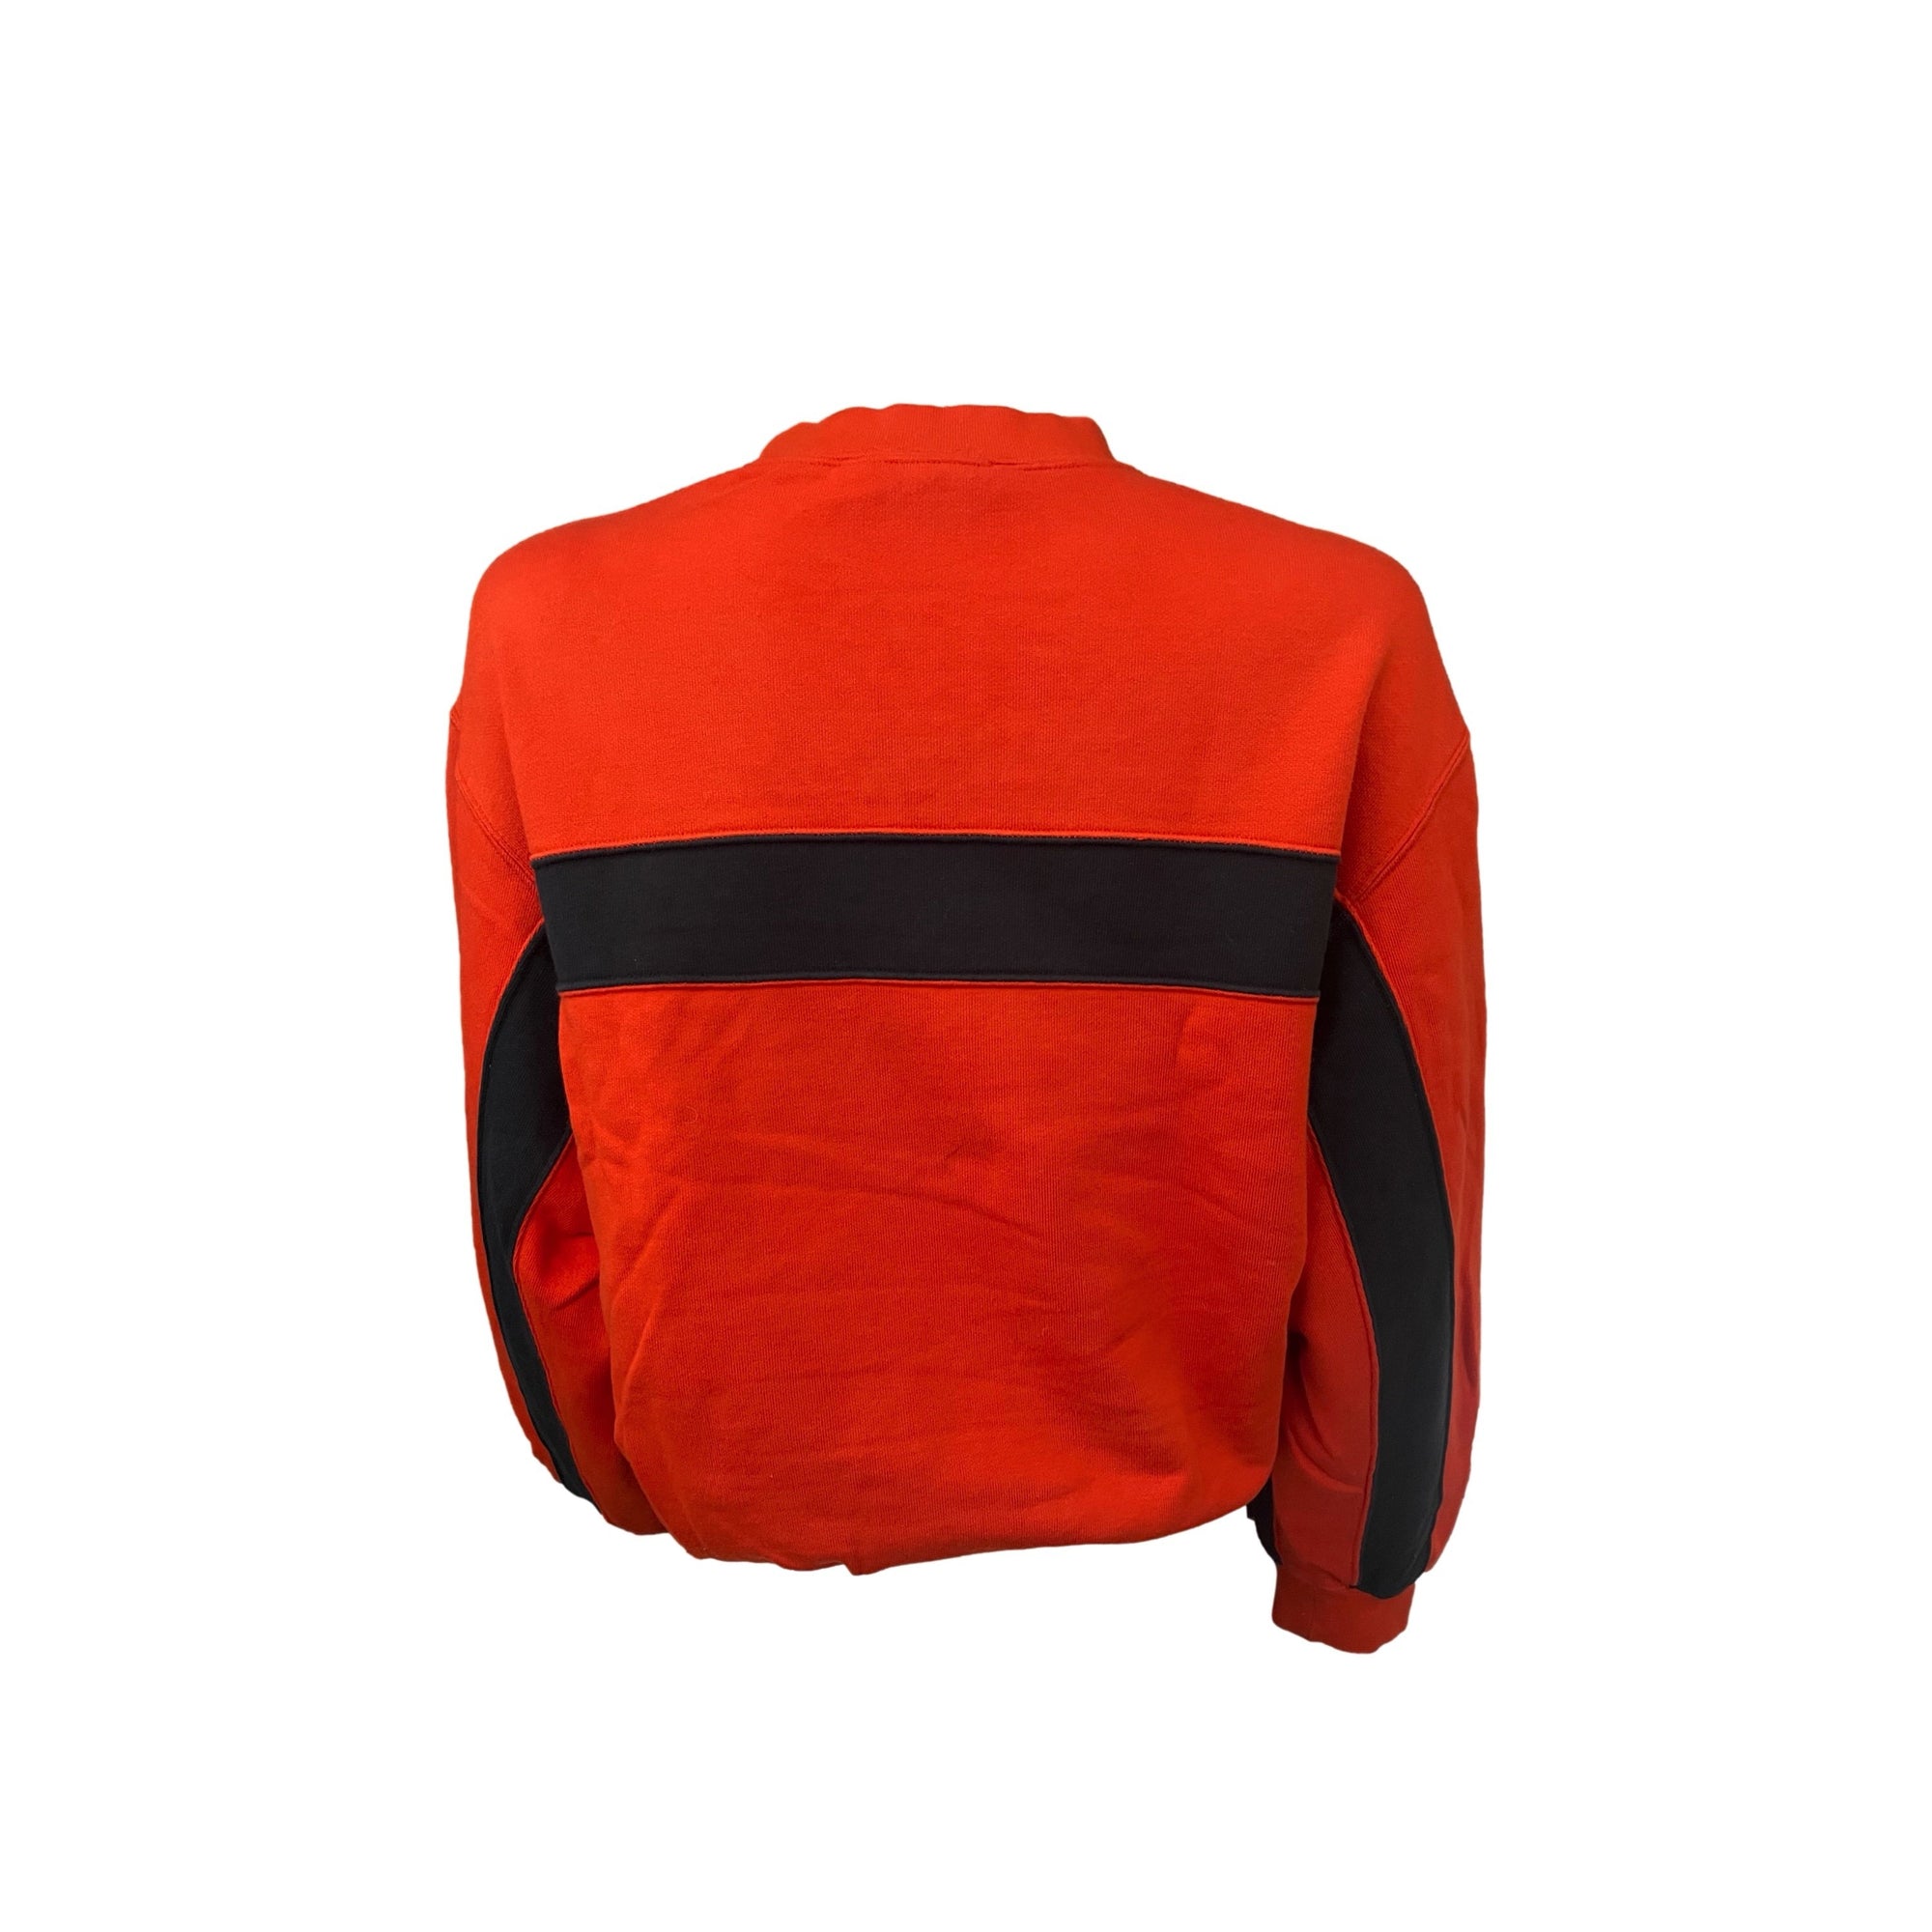 Dior Sports Orange Stripe Sweatshirt - Apparel